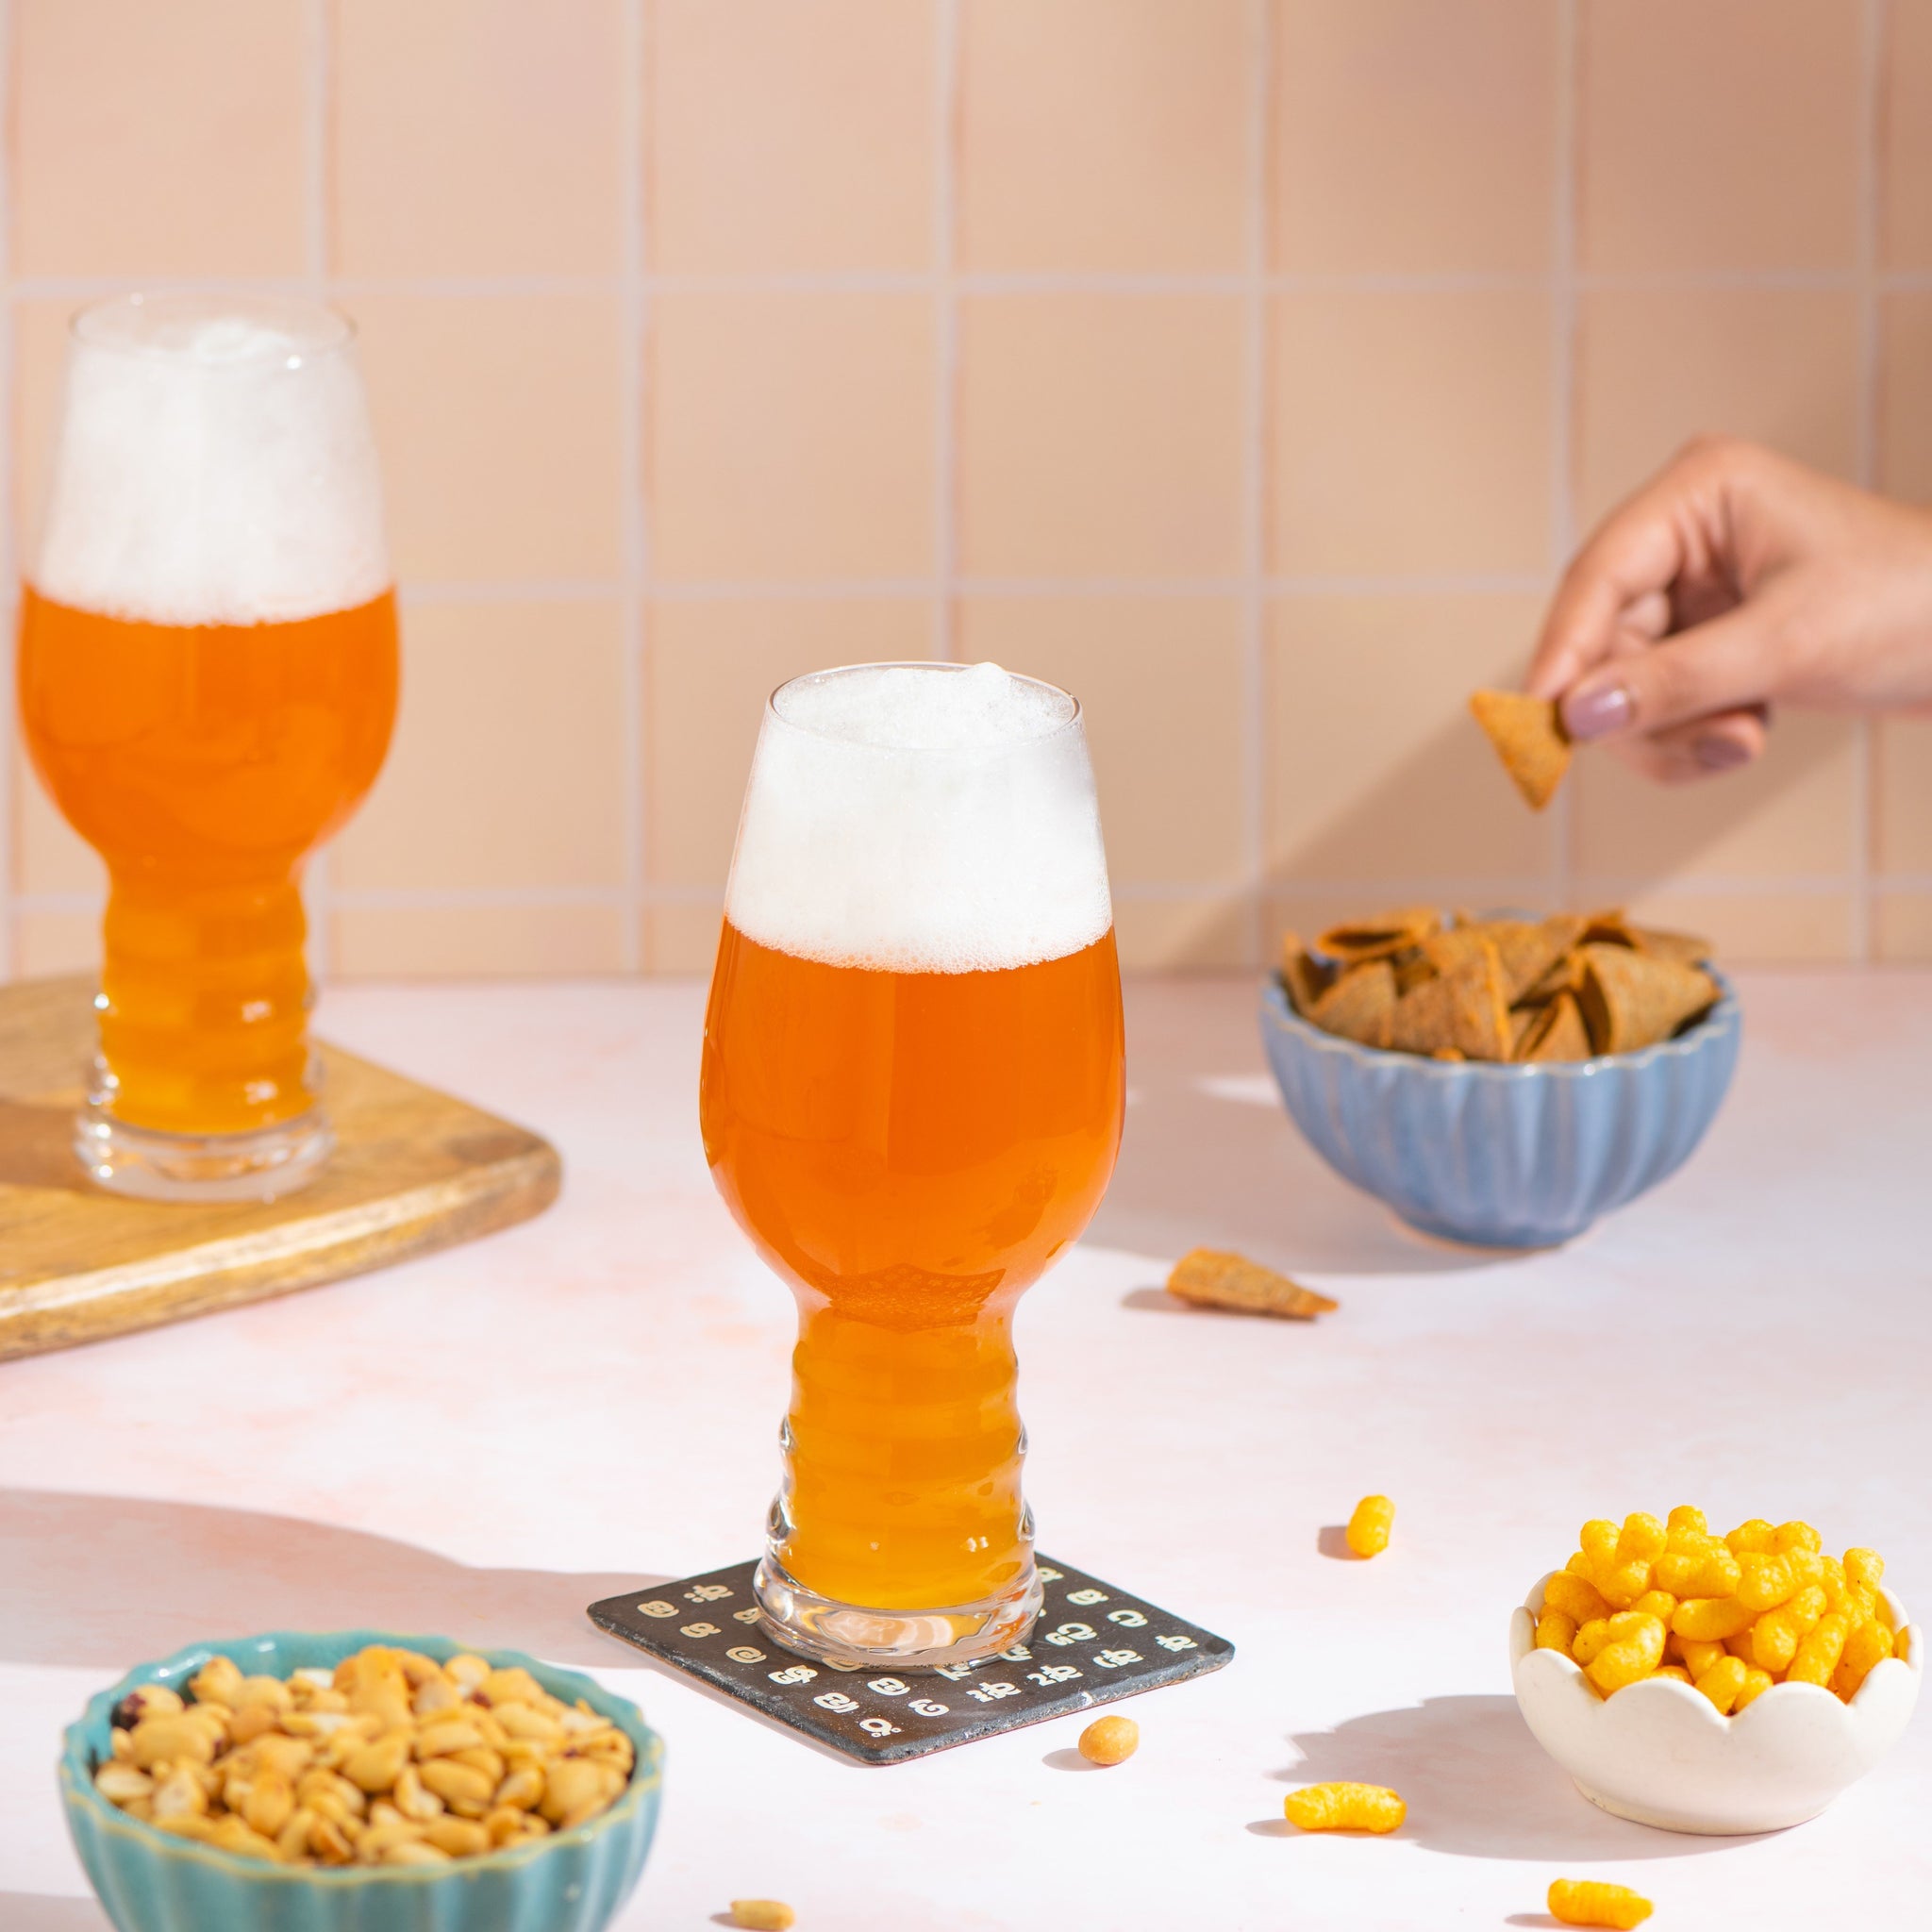 Craft IPA Beer Glass - Set Of 2